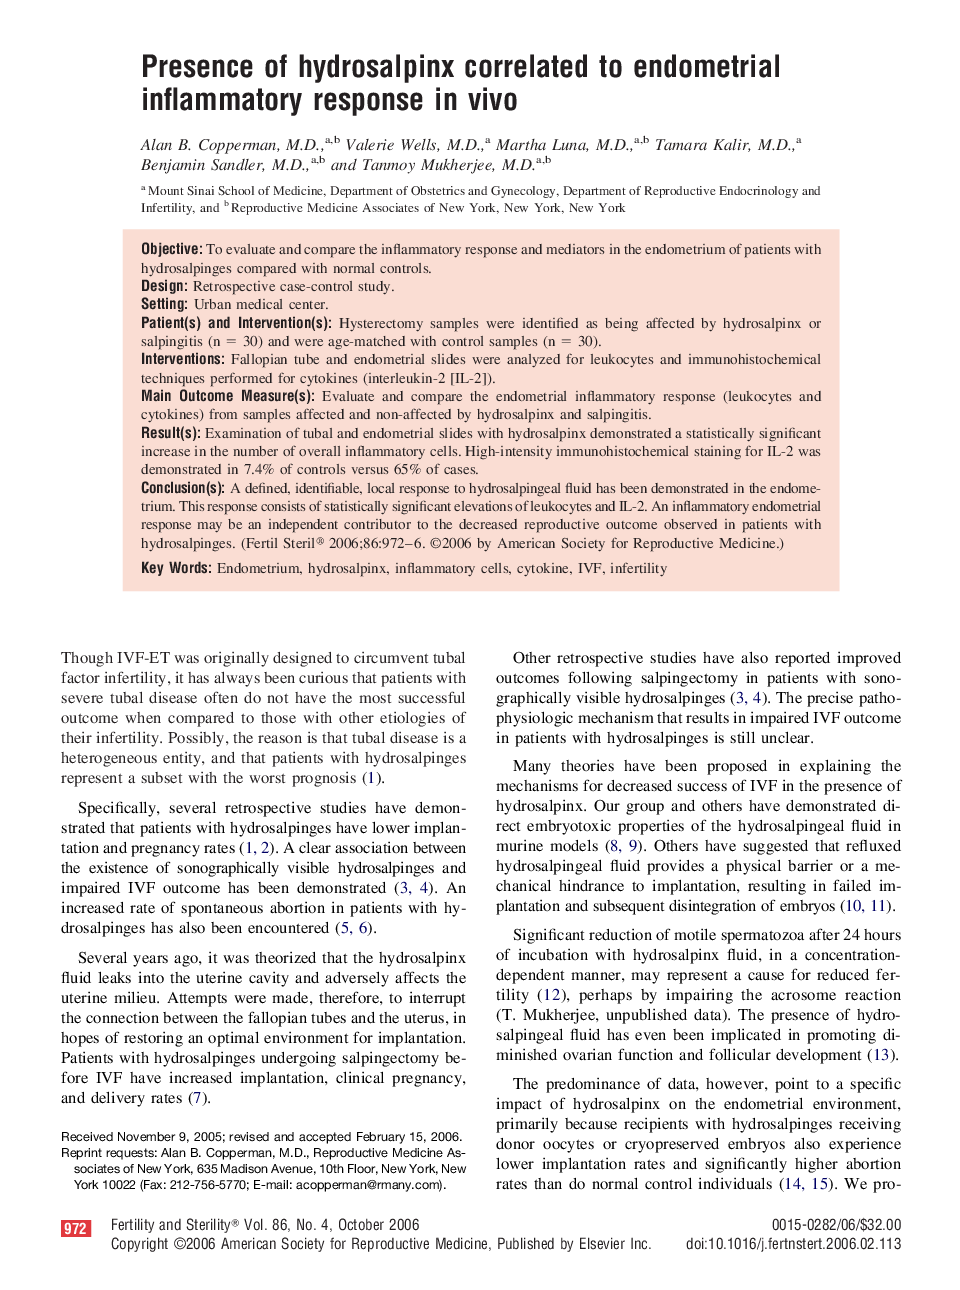 Presence of hydrosalpinx correlated to endometrial inflammatory response in vivo